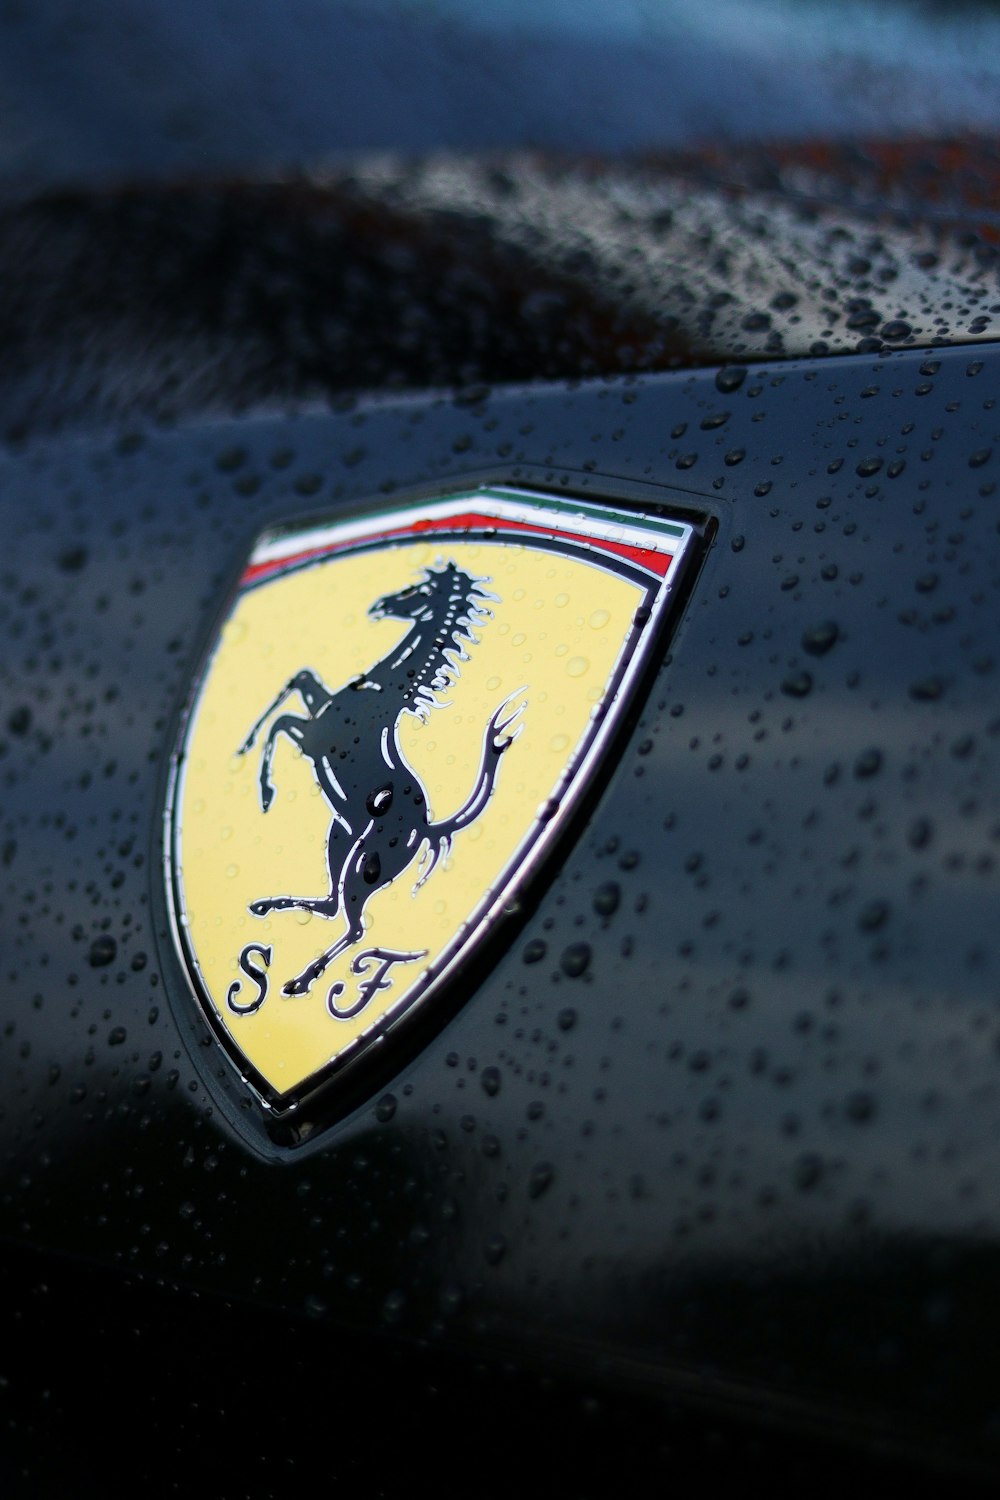 Ferrari Logo Pictures | Download Free Images on Unsplash